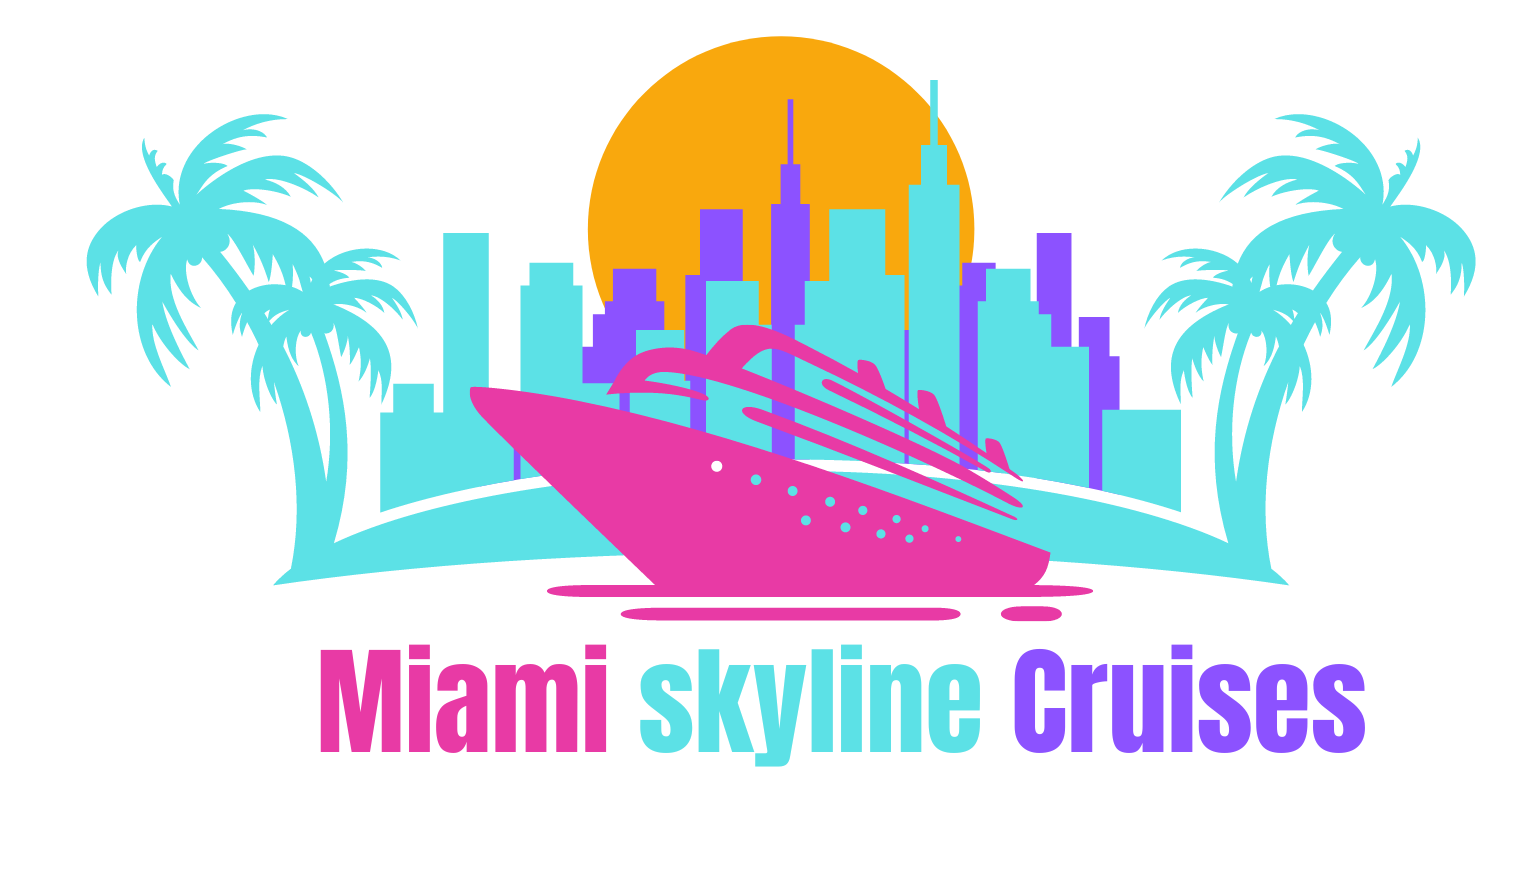 Miami Skyline Cruises